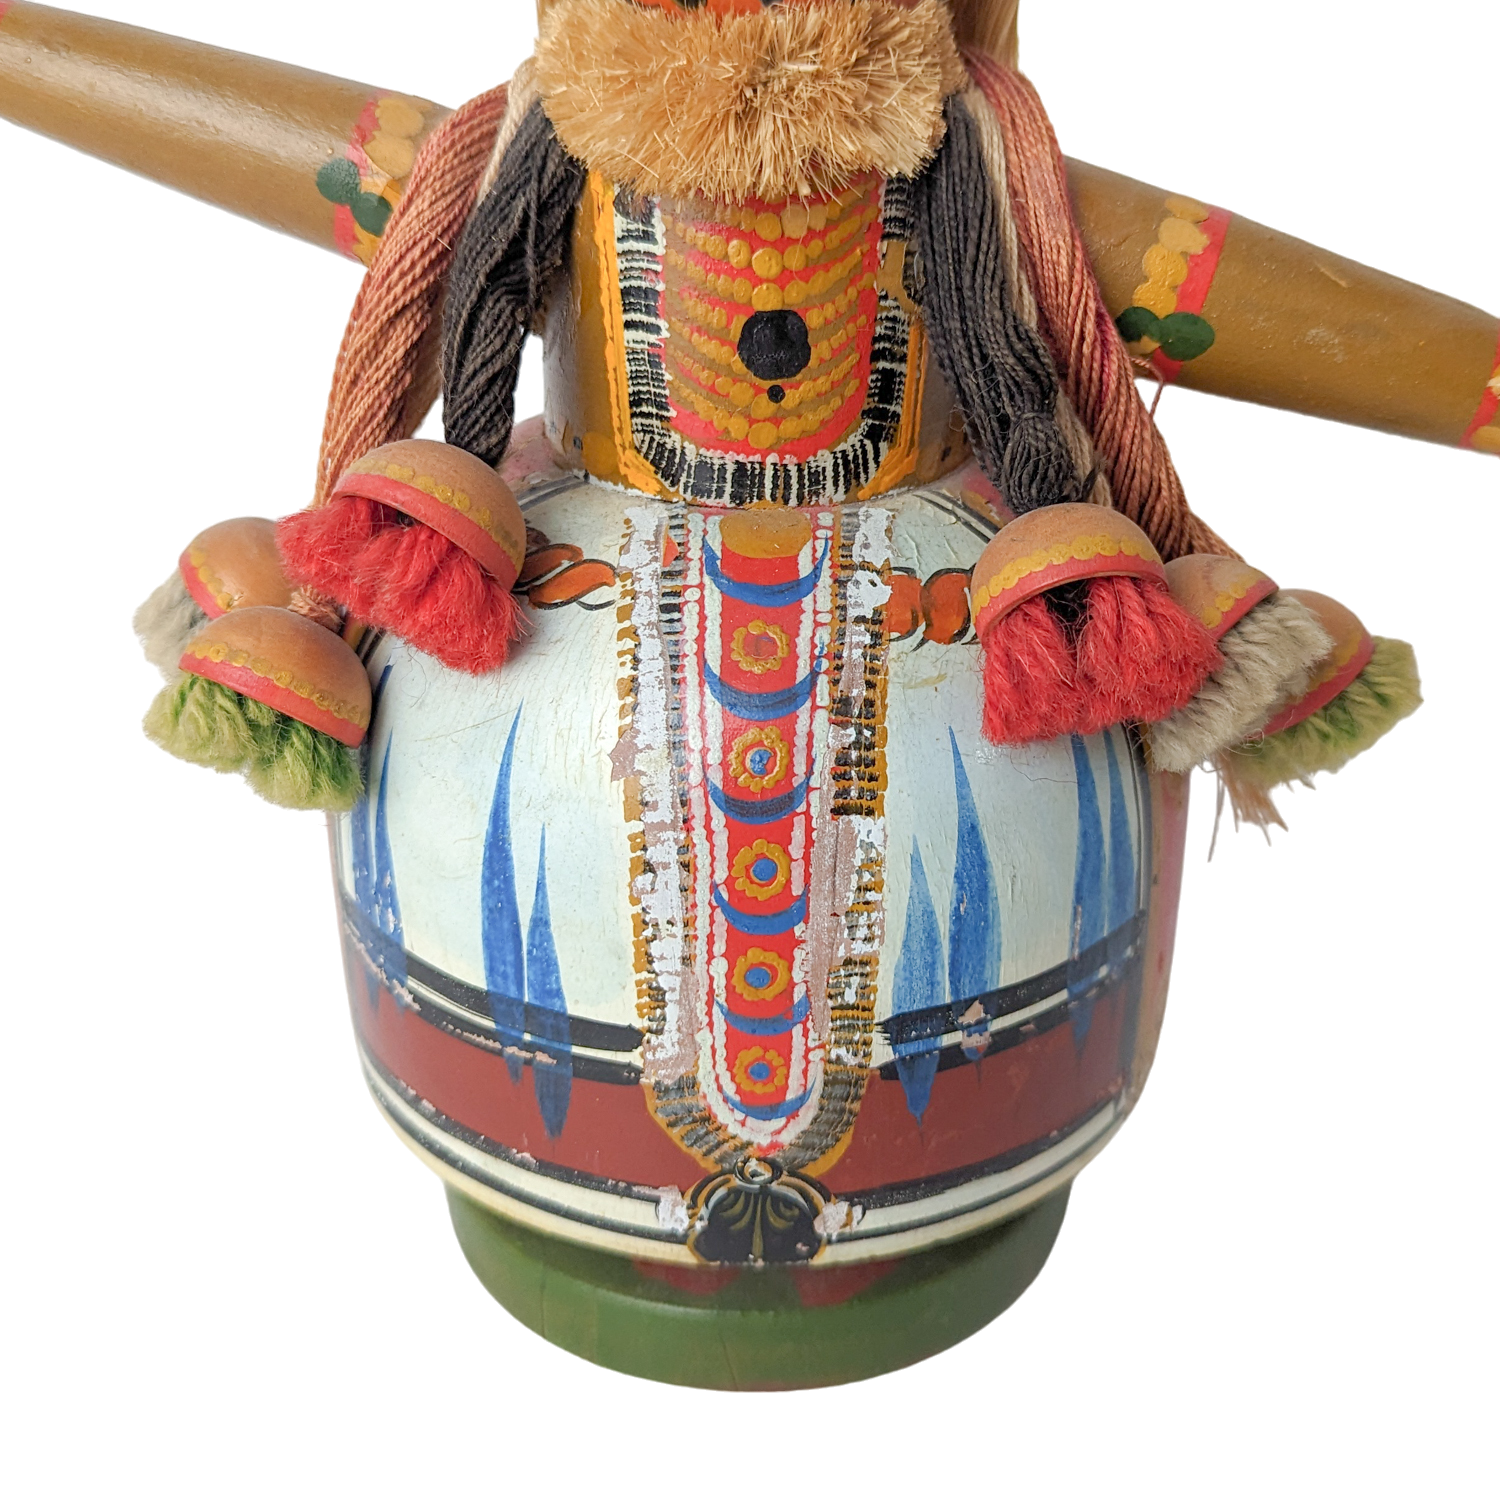 Vintage Wood Kathakali Doll from India